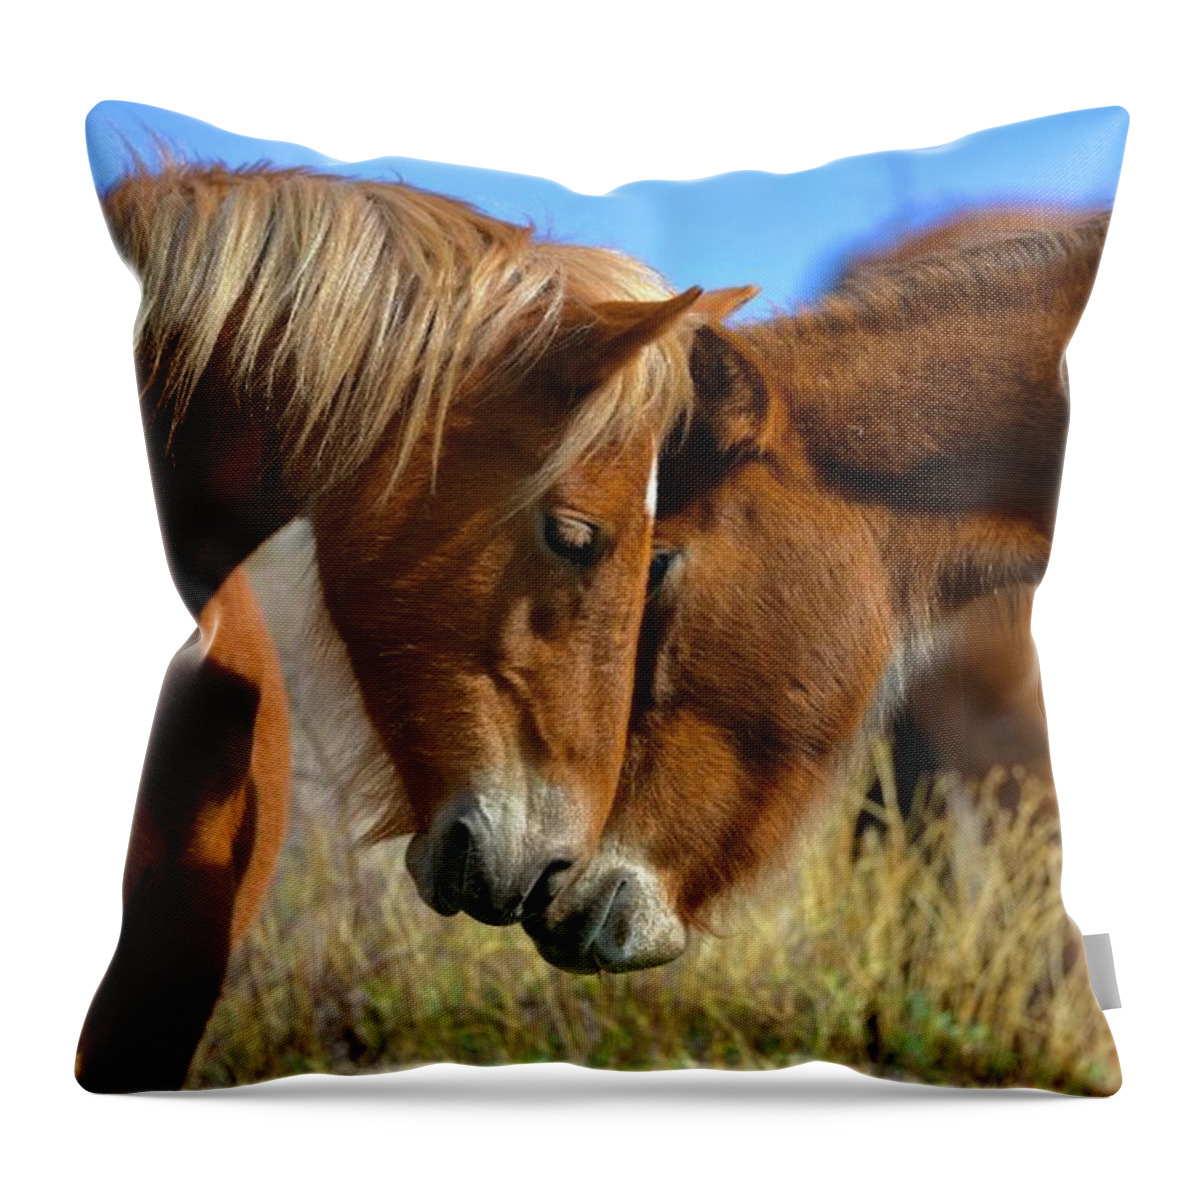 Salt River Wild Horses Throw Pillow featuring the digital art Heartwarming by Tammy Keyes